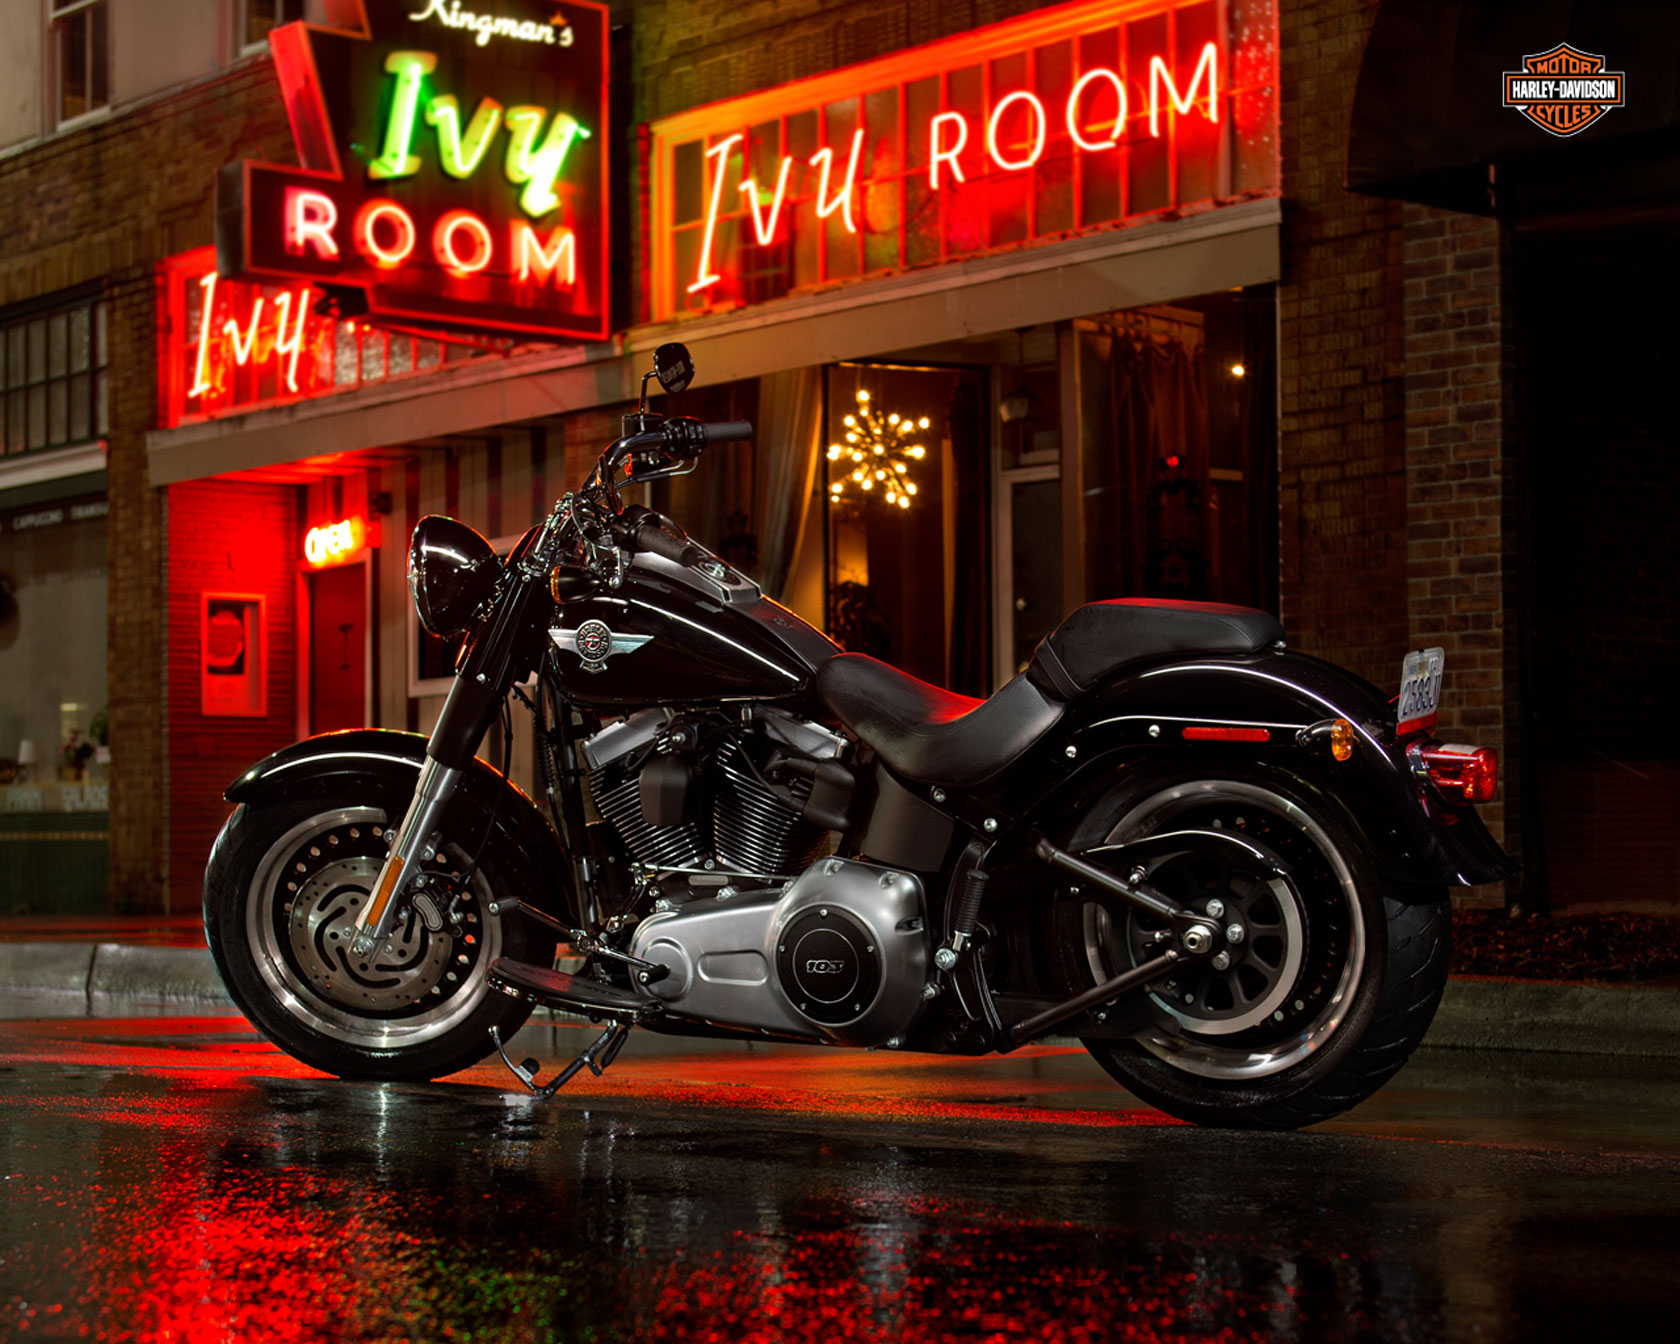 2013 Harley Davidson Flstfb Softail Fat Boy Special 110th Anniversary Review